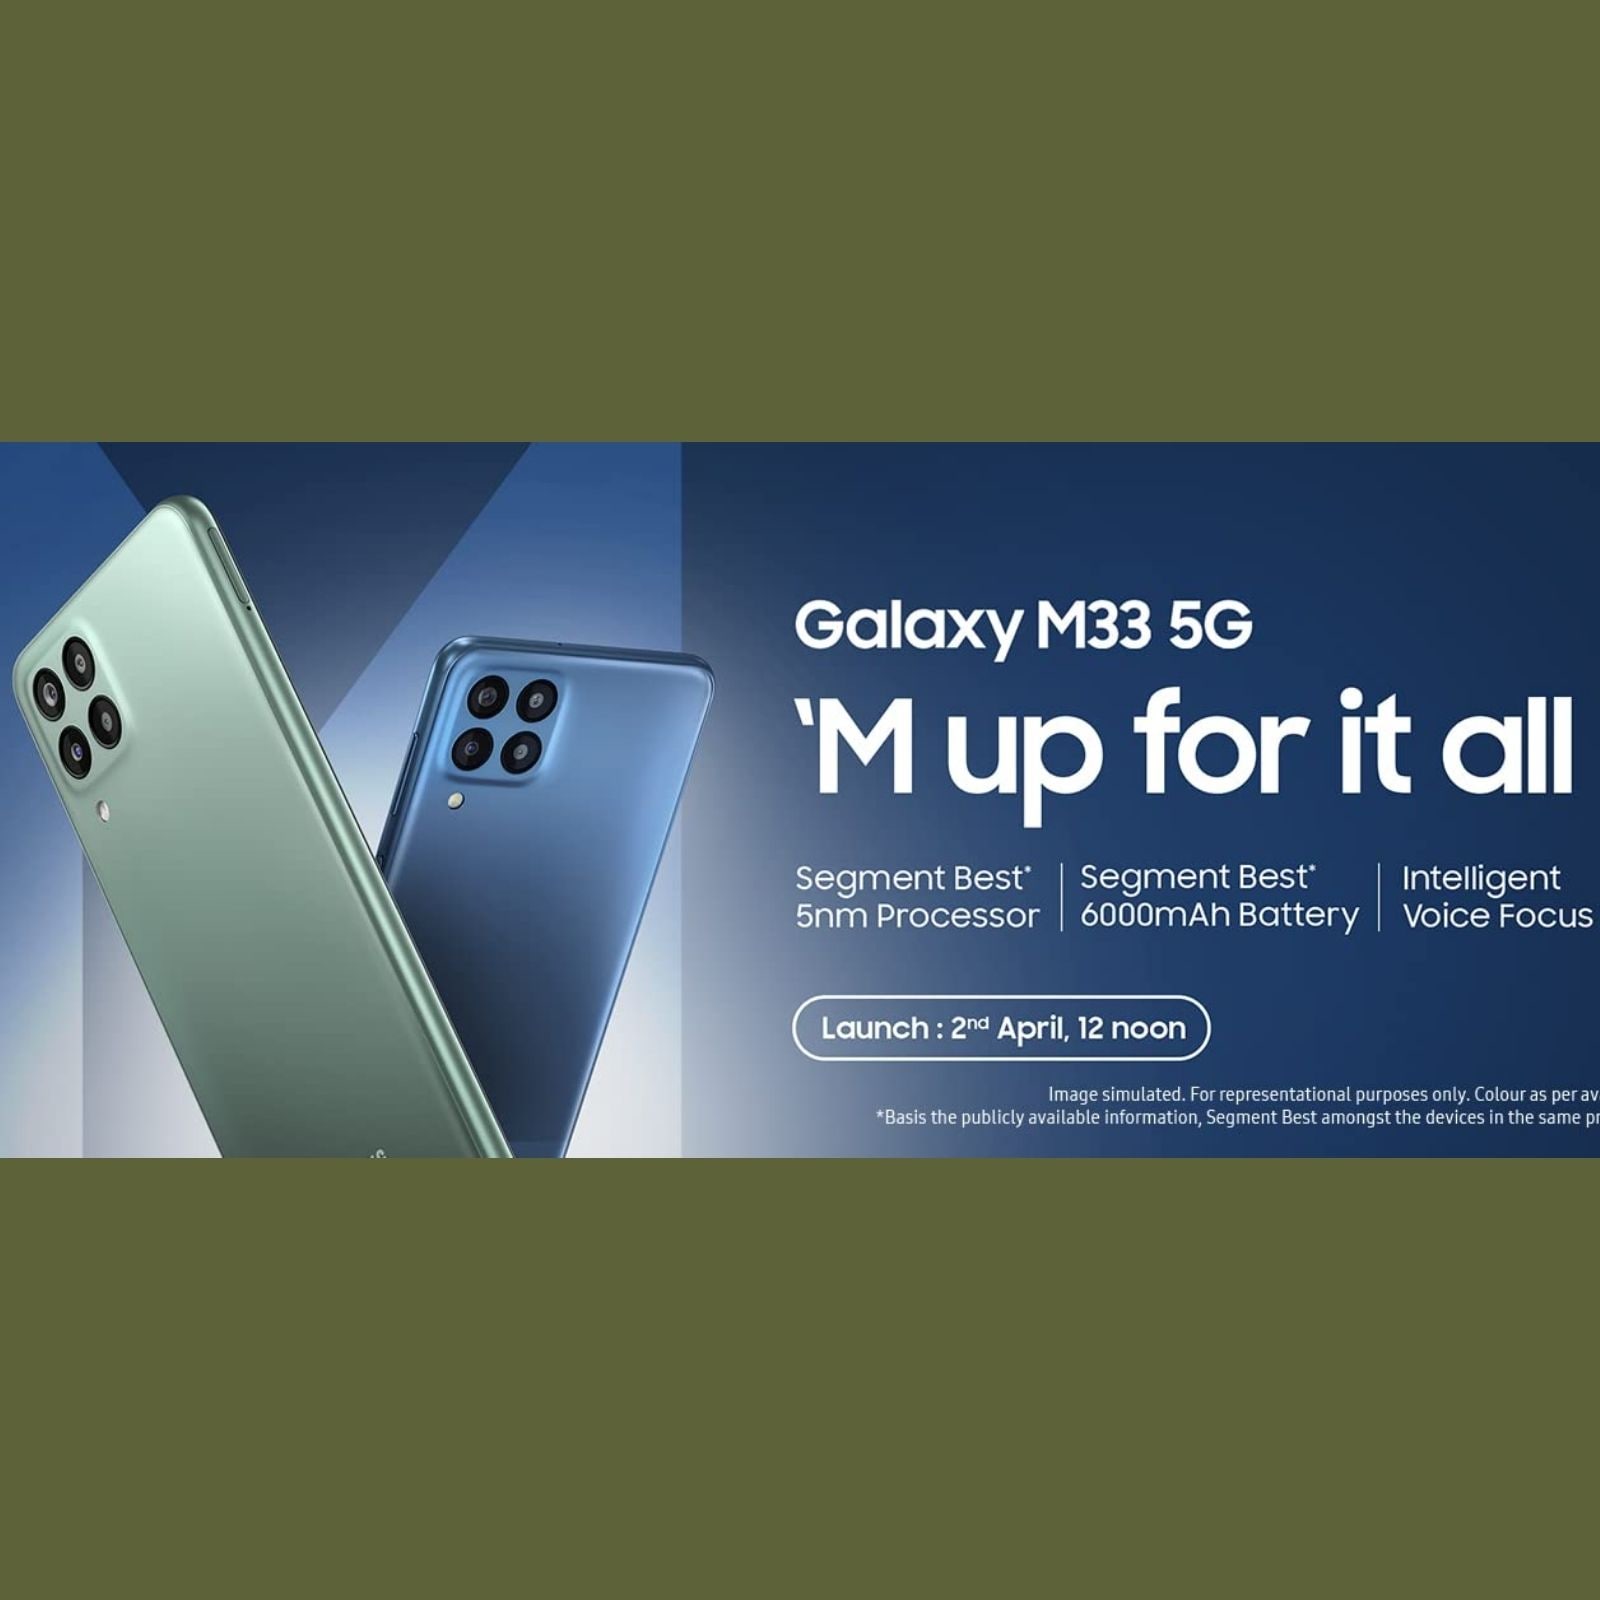 Samsung Galaxy A23 5G Pricing, Colour Options Tipped via Retailer